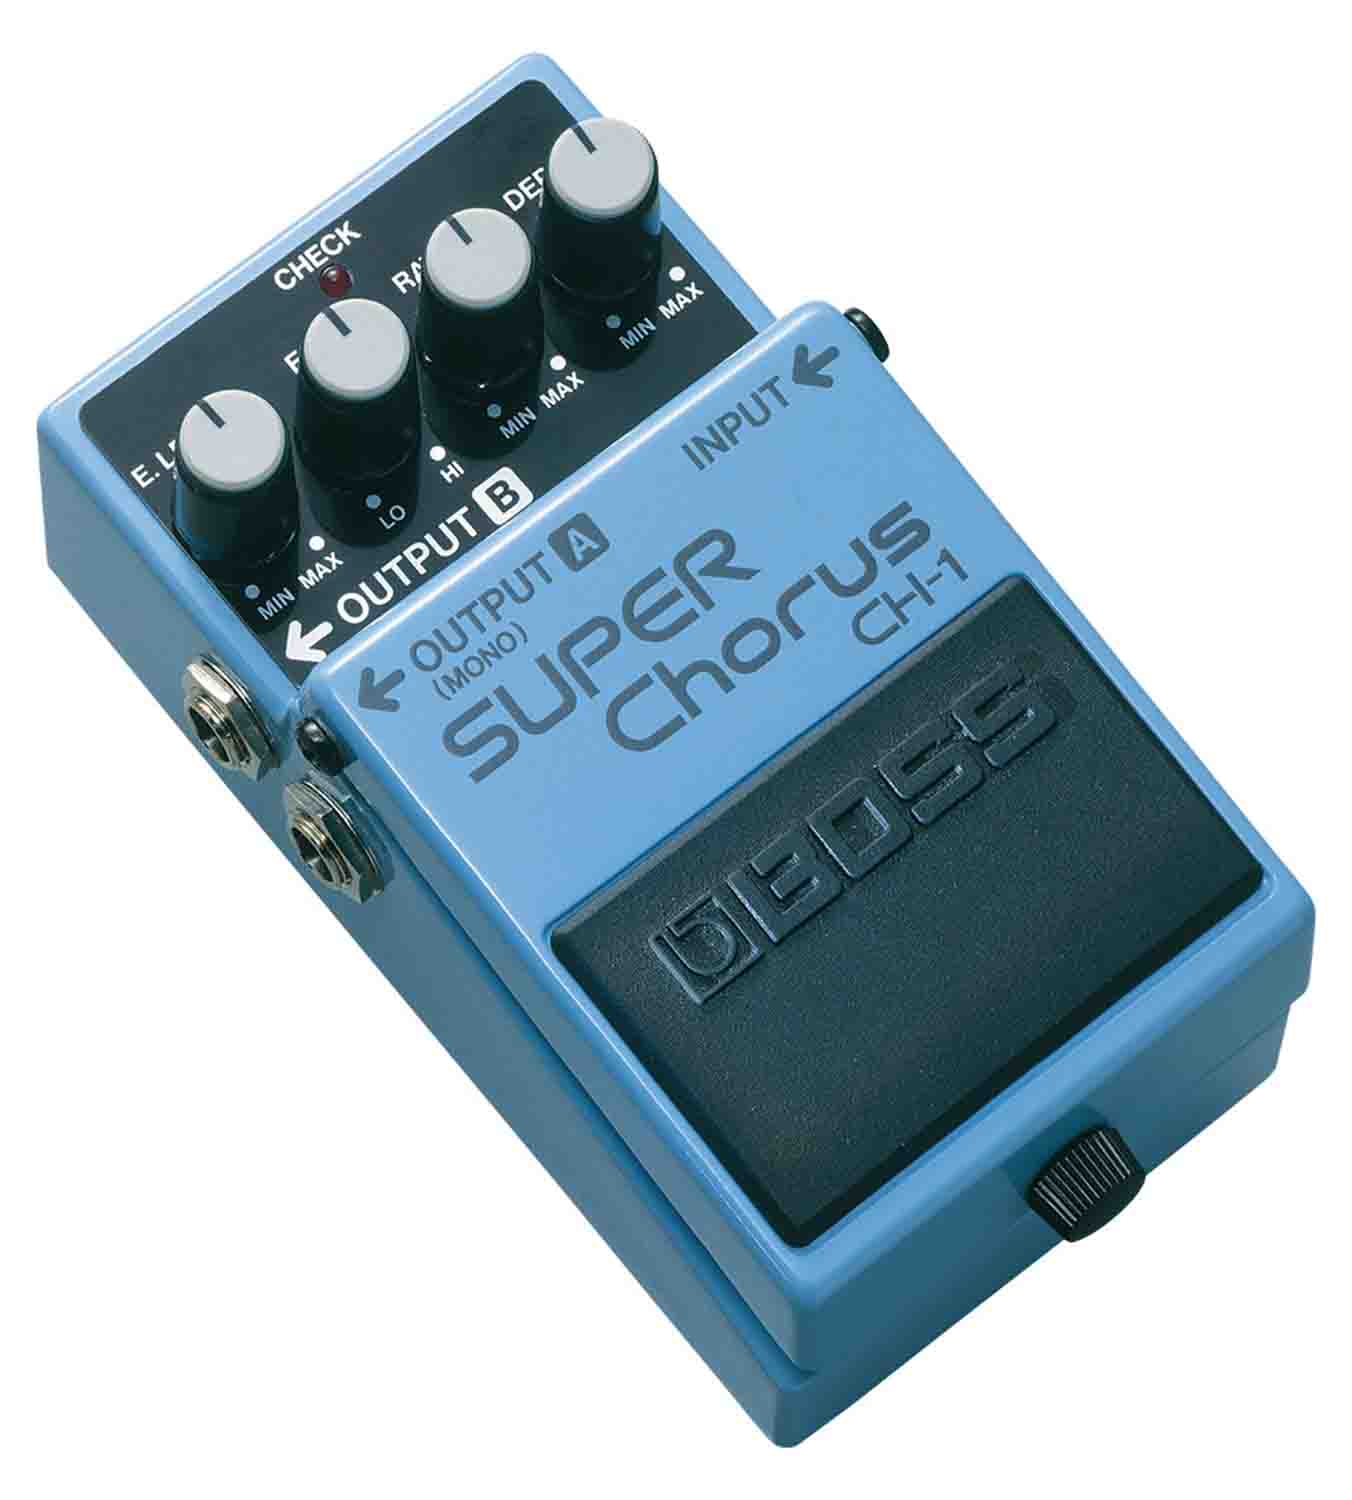 B-Stock: Boss CH-1 Stereo Super Chorus Pedal Boss